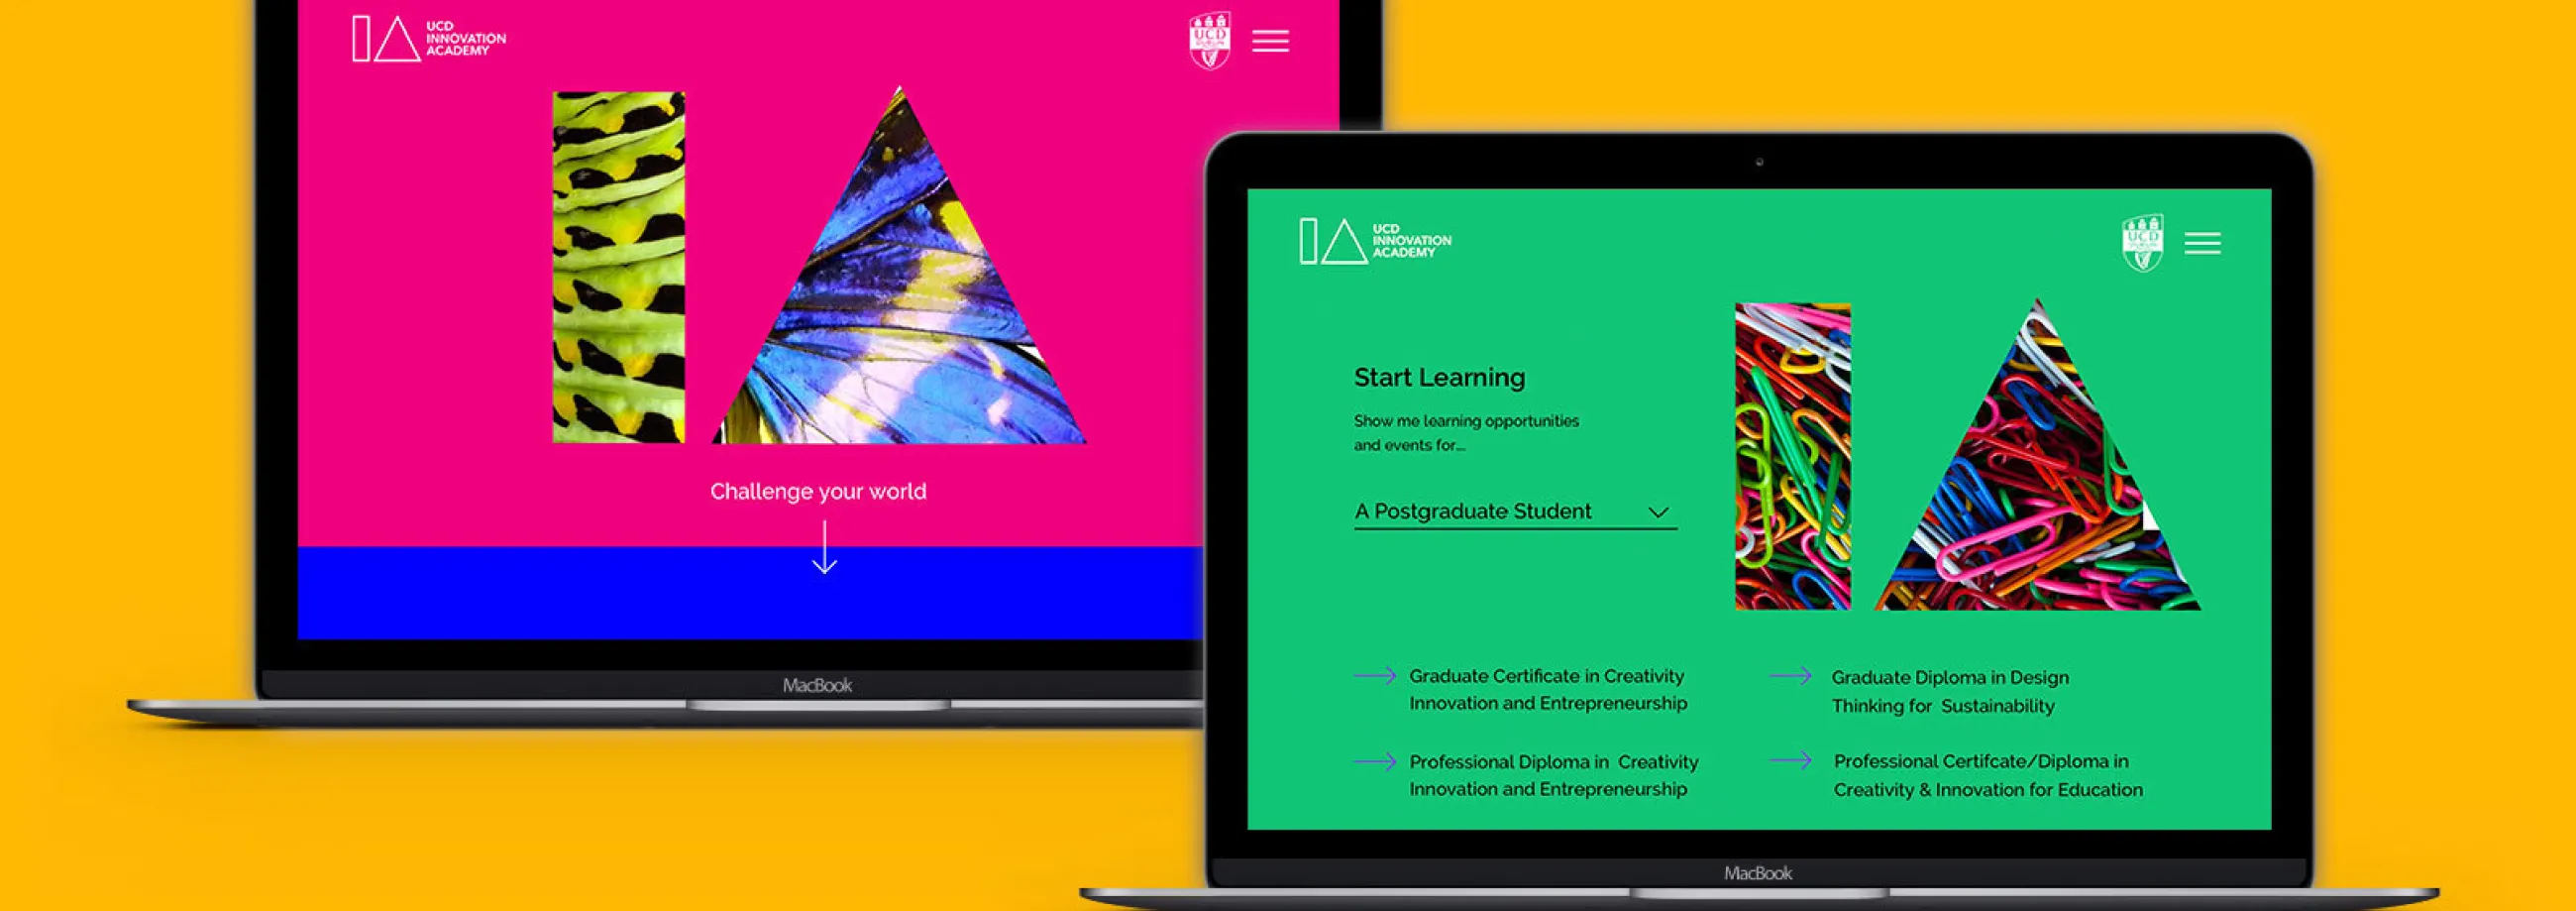 UCD Innovation Academy website shown on laptop screens